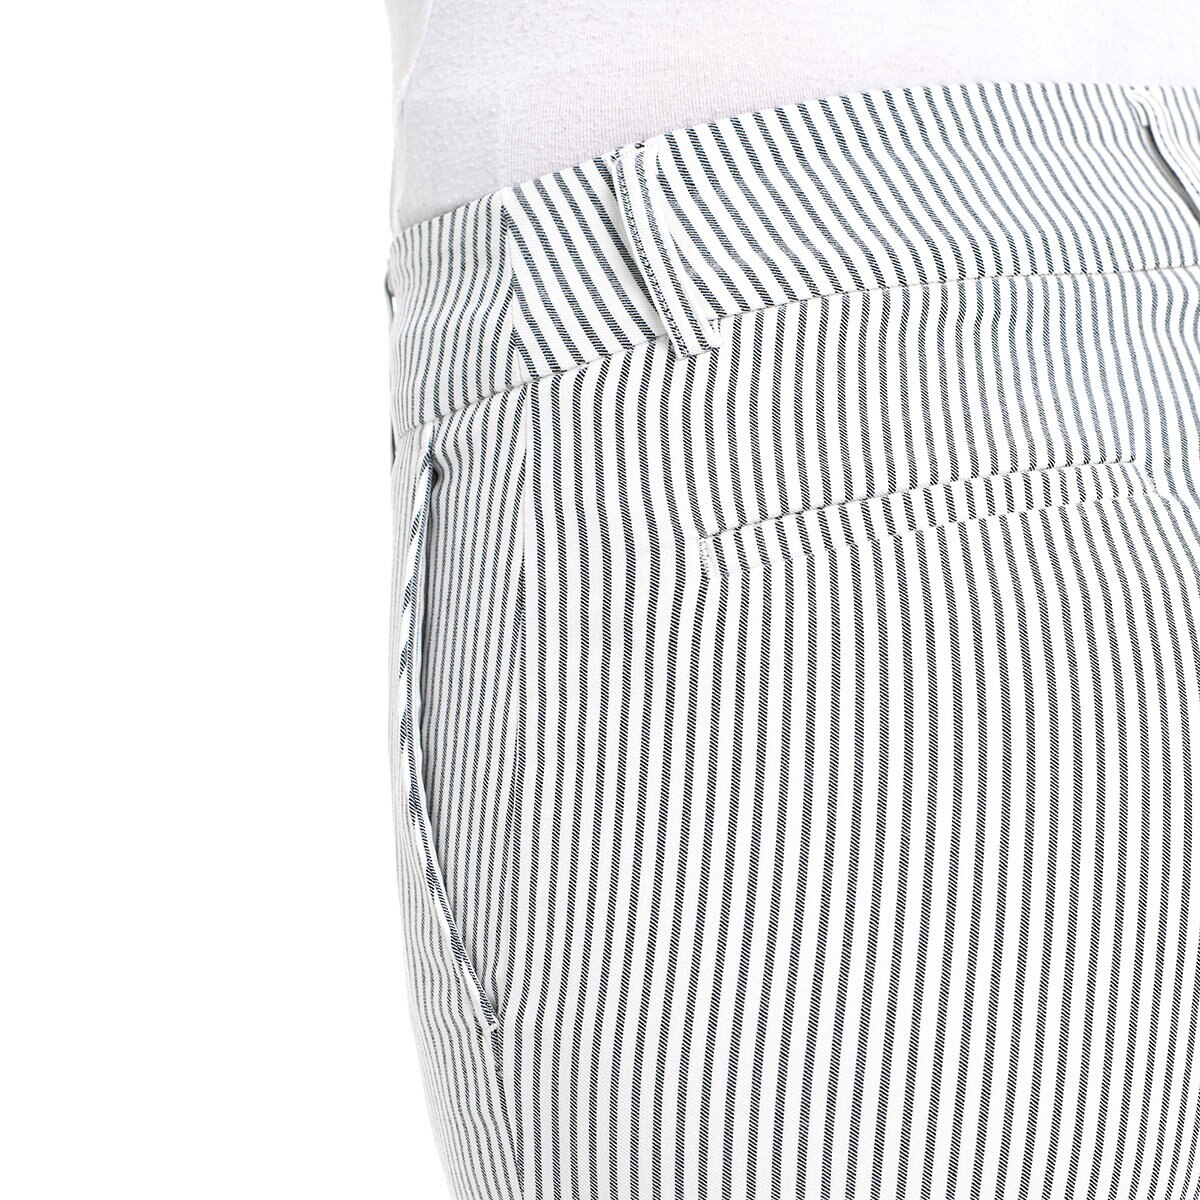 Hilary Radley Pantalón para Dama  Blanco con Rayas Azules